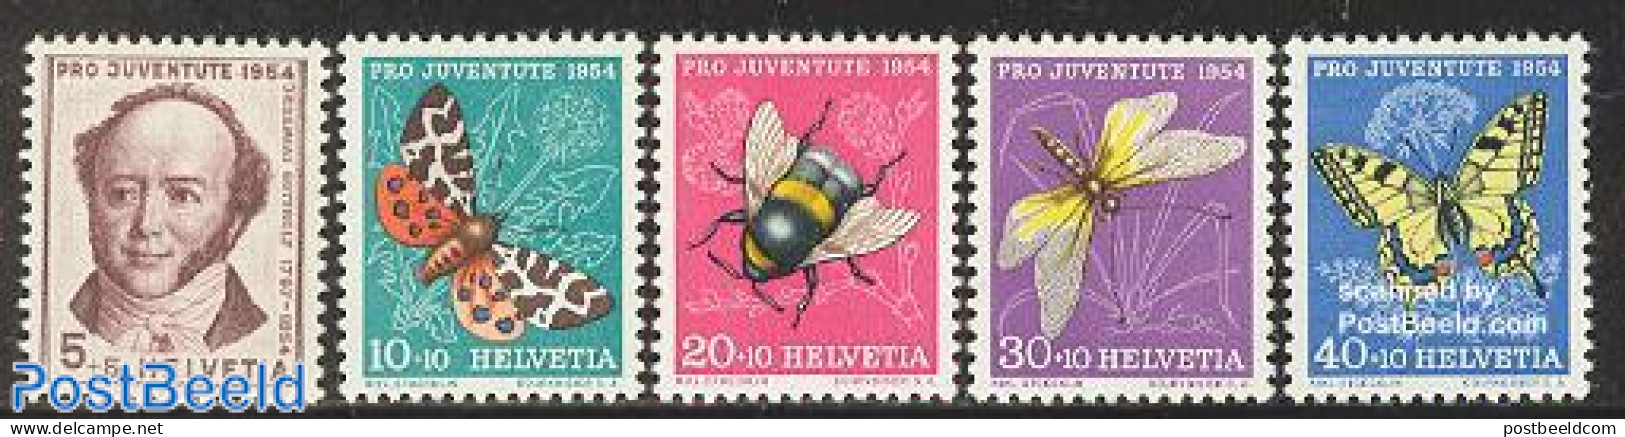 Switzerland 1954 Pro Juventute 5v, Mint NH, Nature - Butterflies - Insects - Art - Authors - Ungebraucht